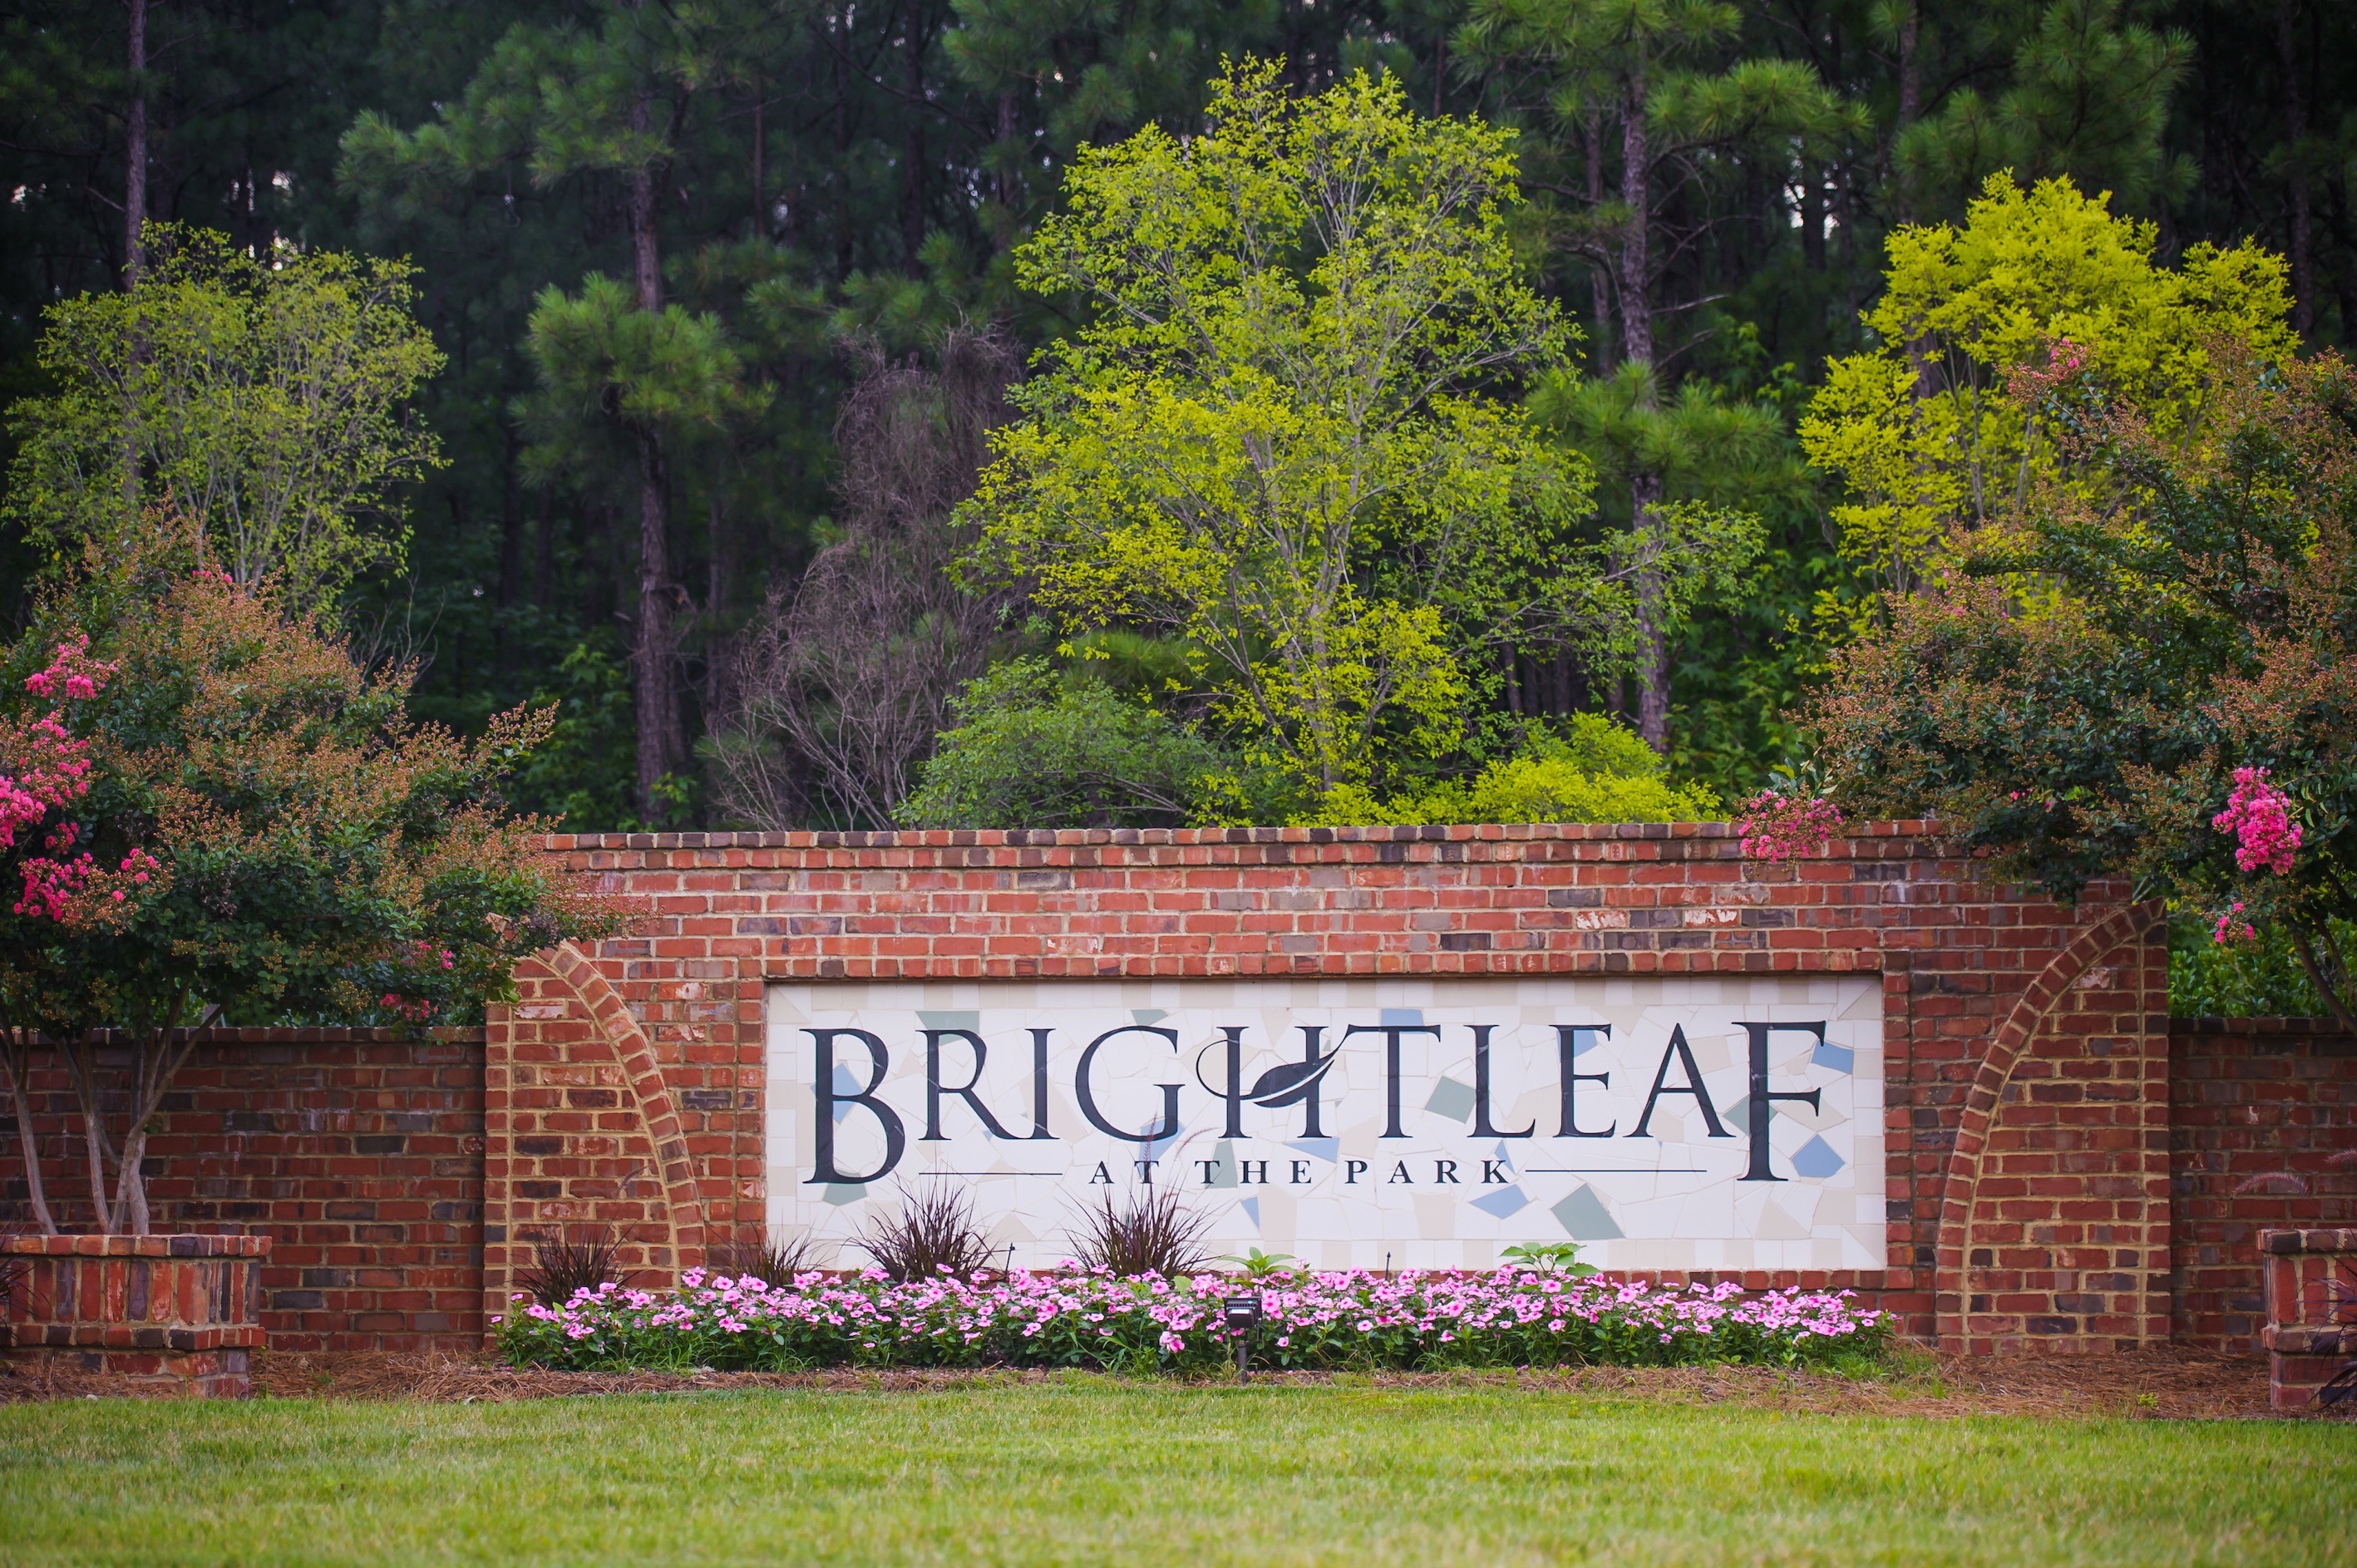 Brightleaf at the Park Homes For Sale: Durham NC Real Estate